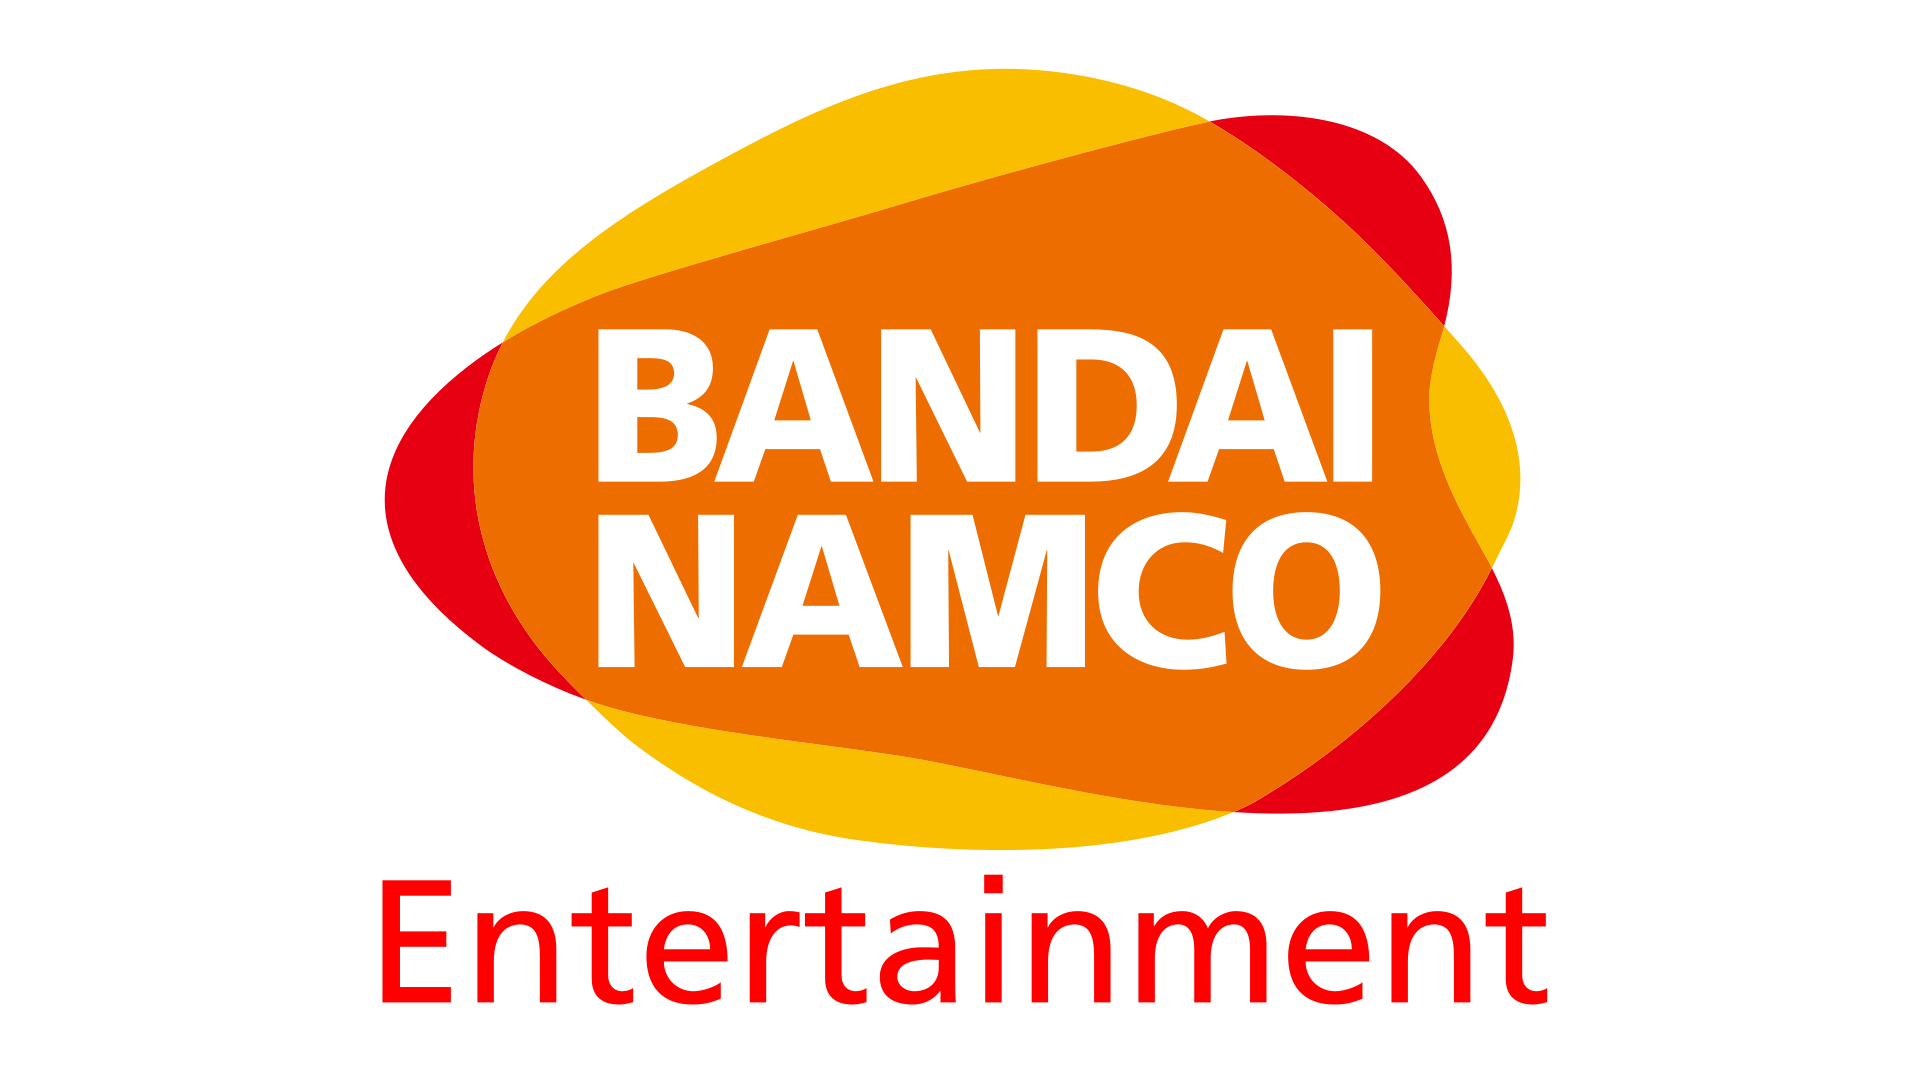 Bandai Namco bestätigt Hack durch Ransomware-Gruppe Titel